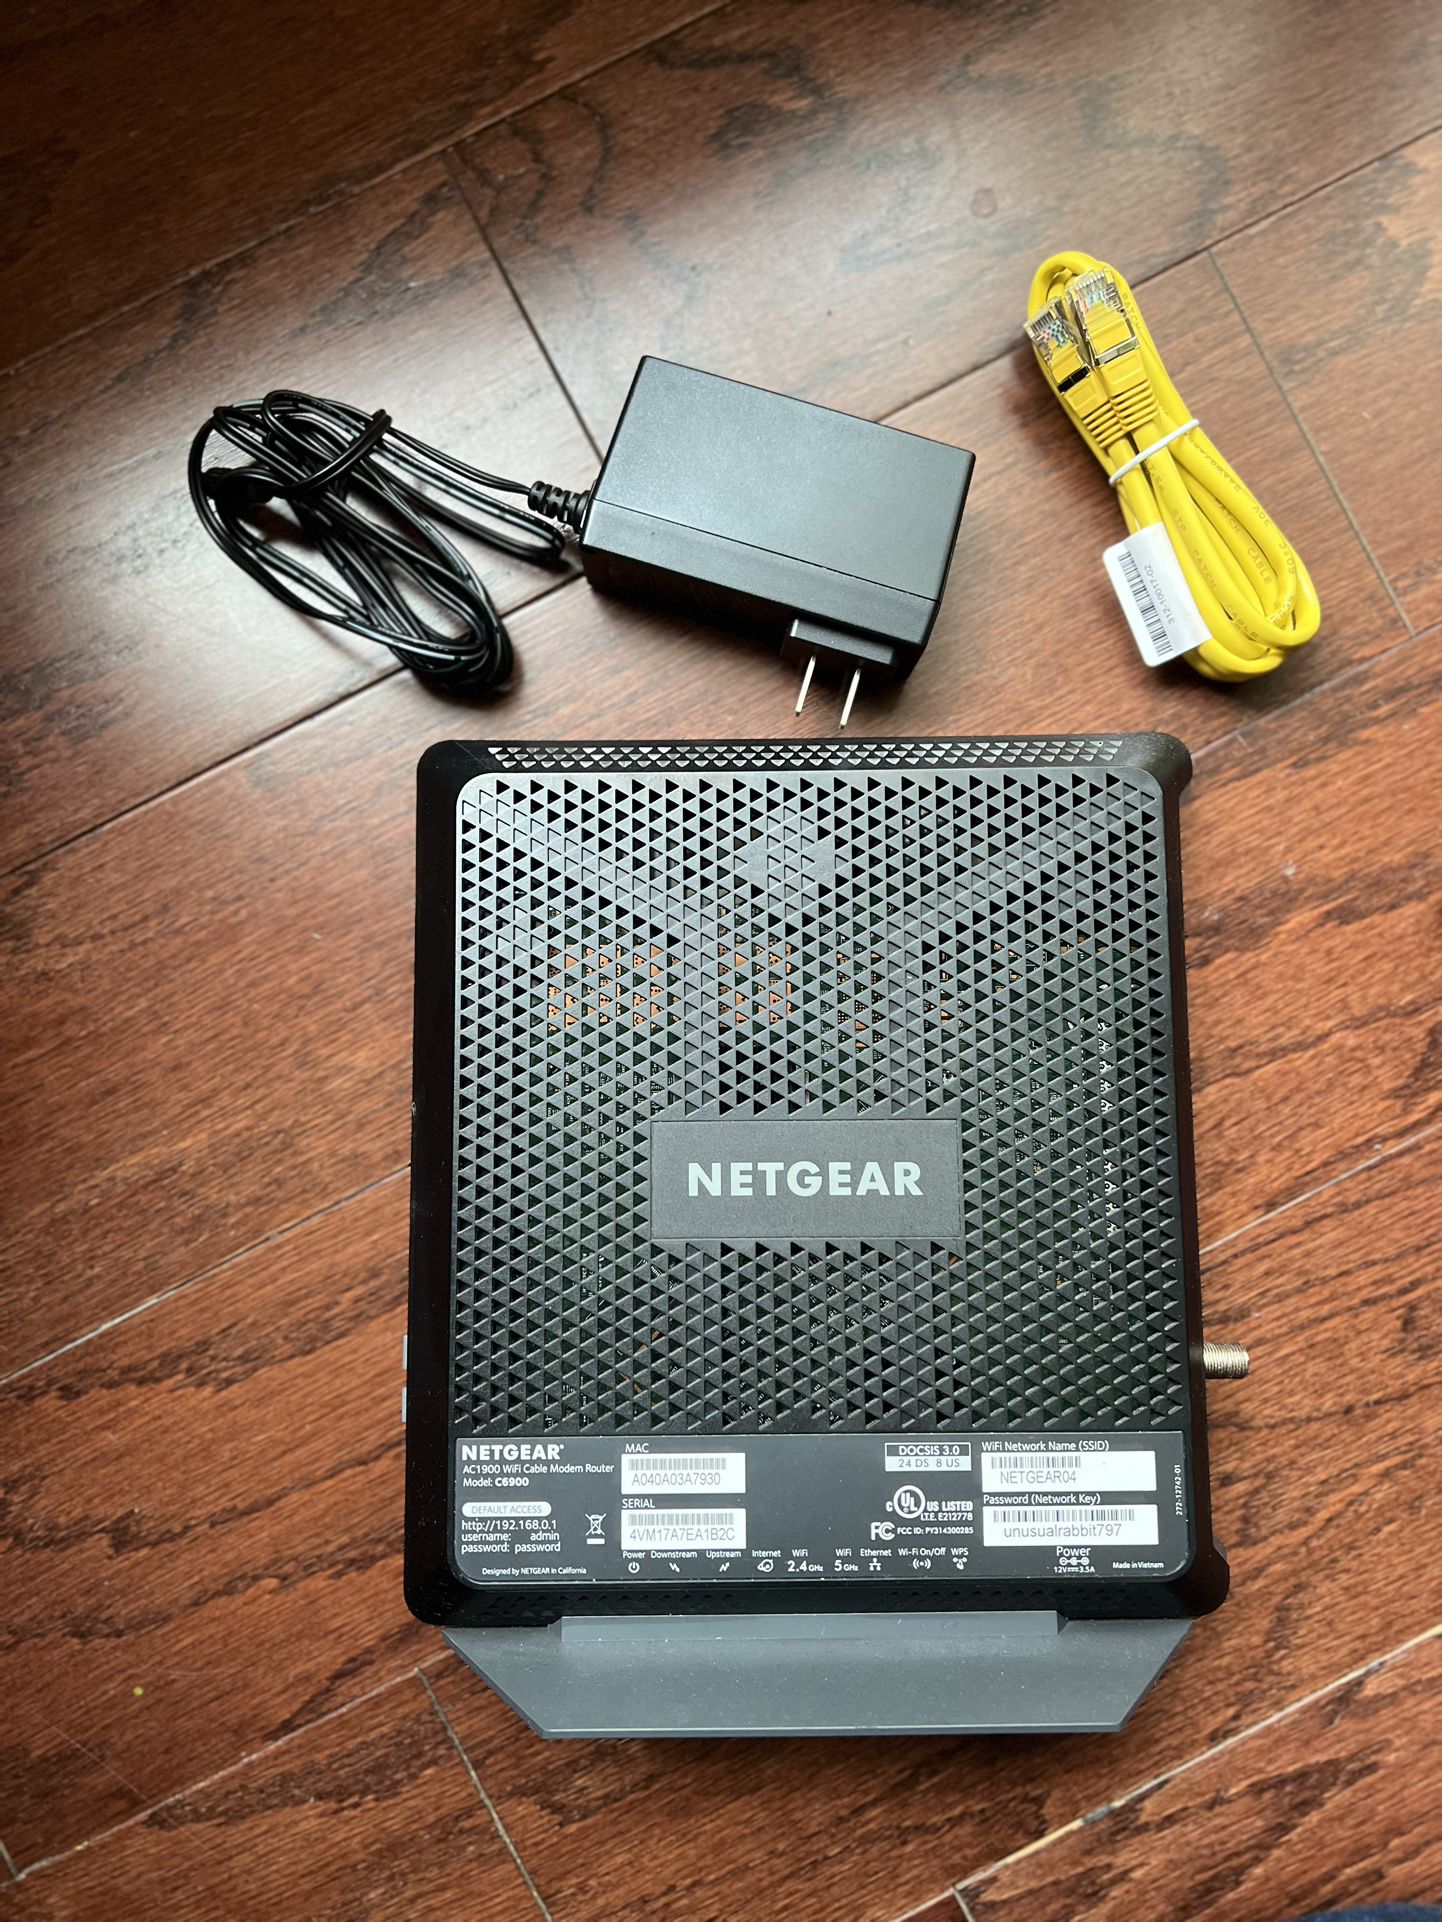 Netgear AC1900 Wifi Cable Modem Router